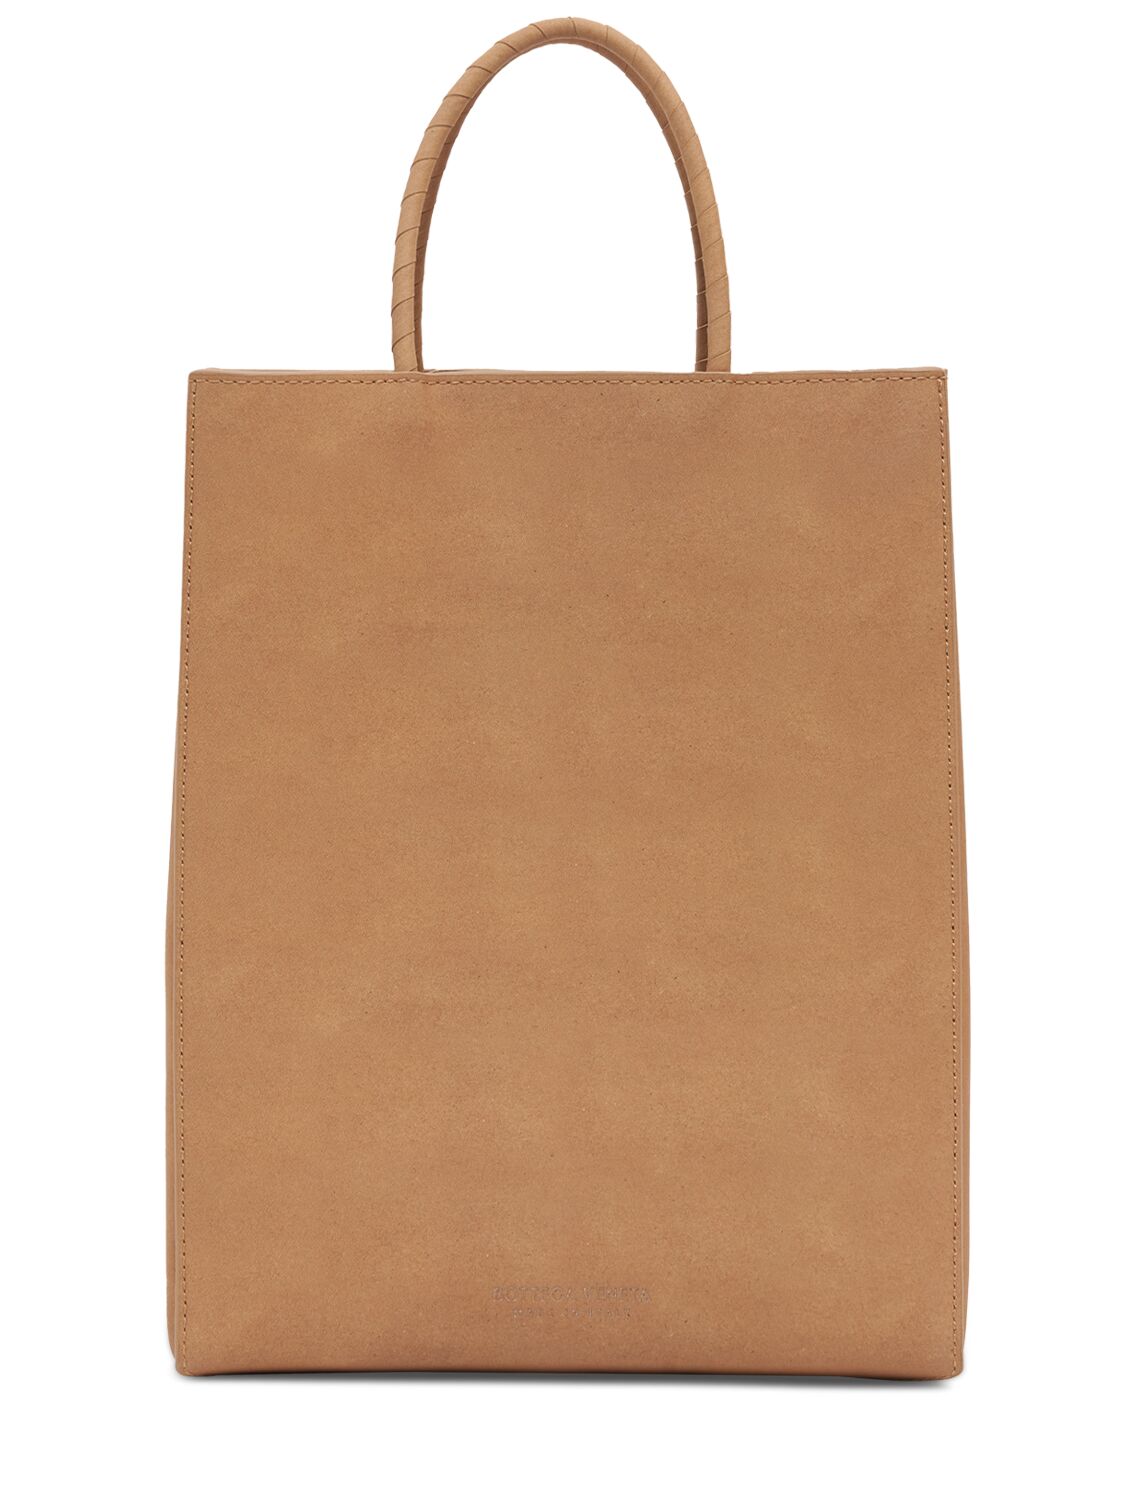 Bottega Veneta The Small Brown Leather Tote Bag In Kraft